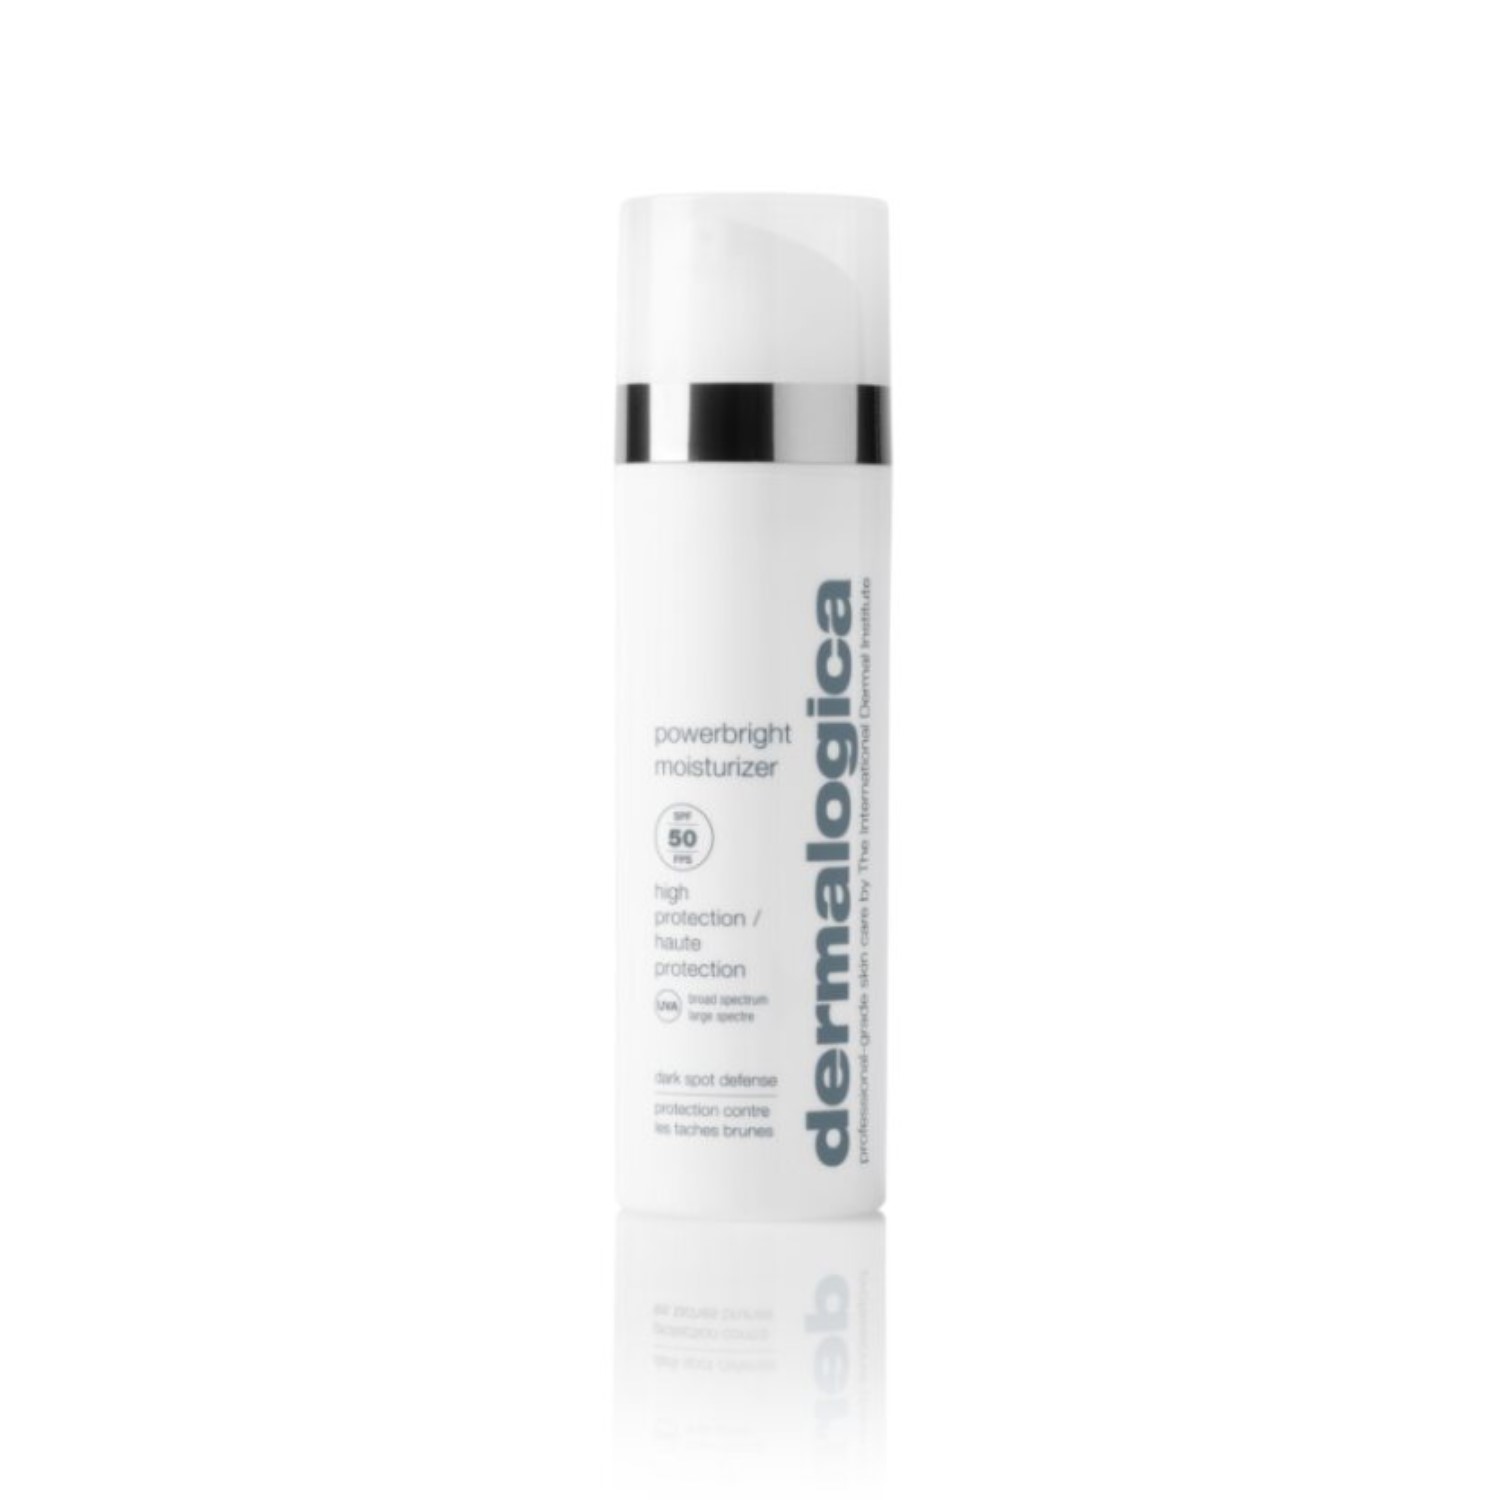 powerbright moisturizer (crema hidratante)